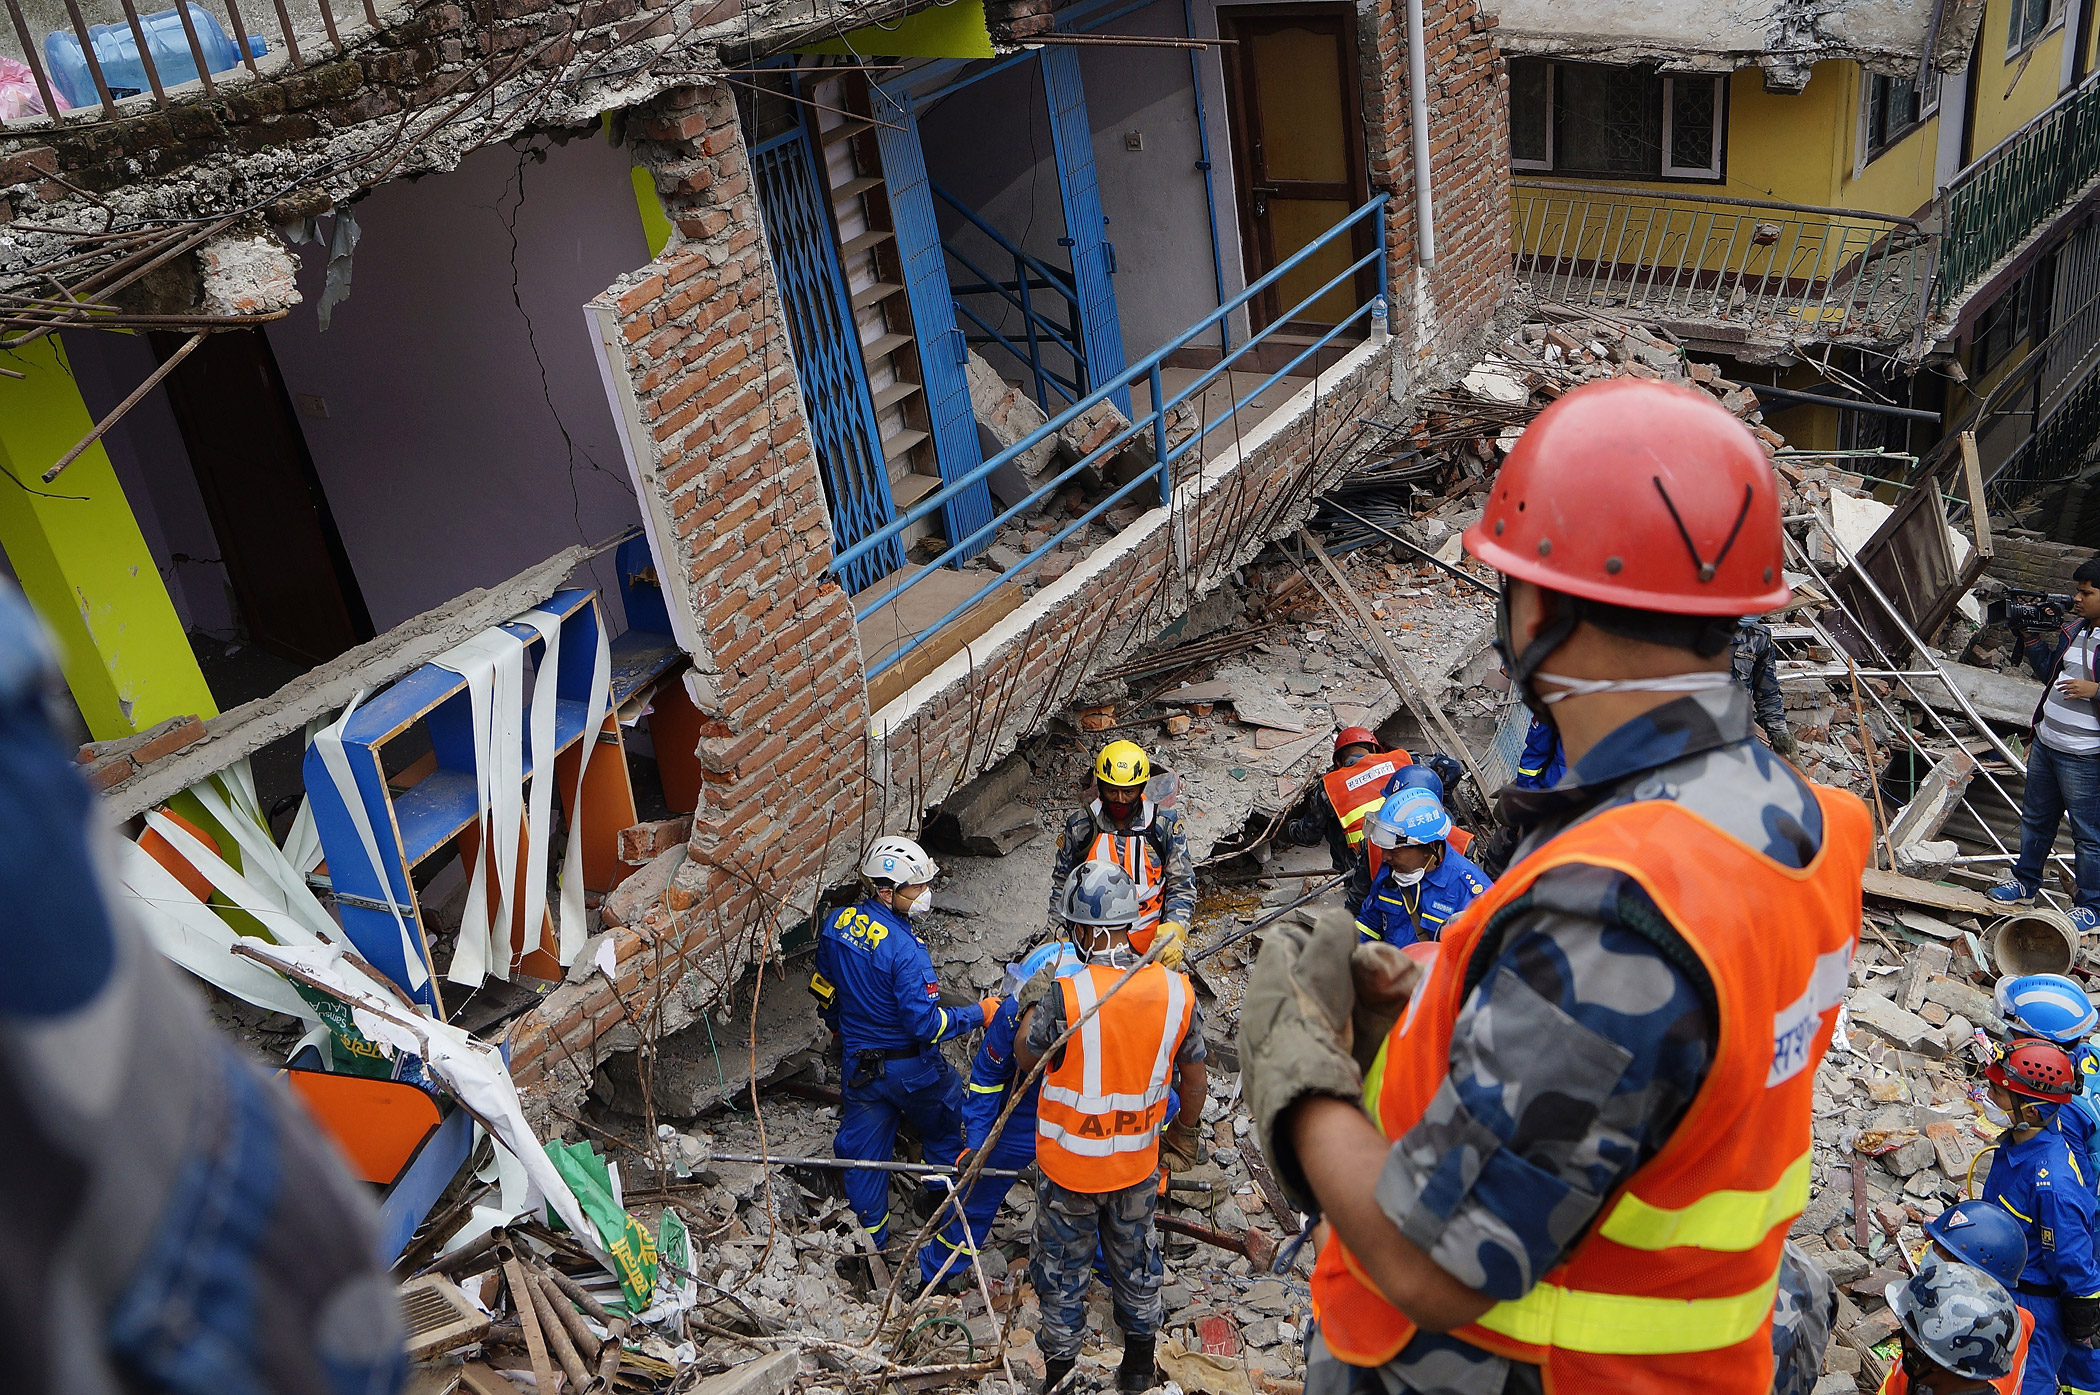 Powerful earthquake hits Nepal